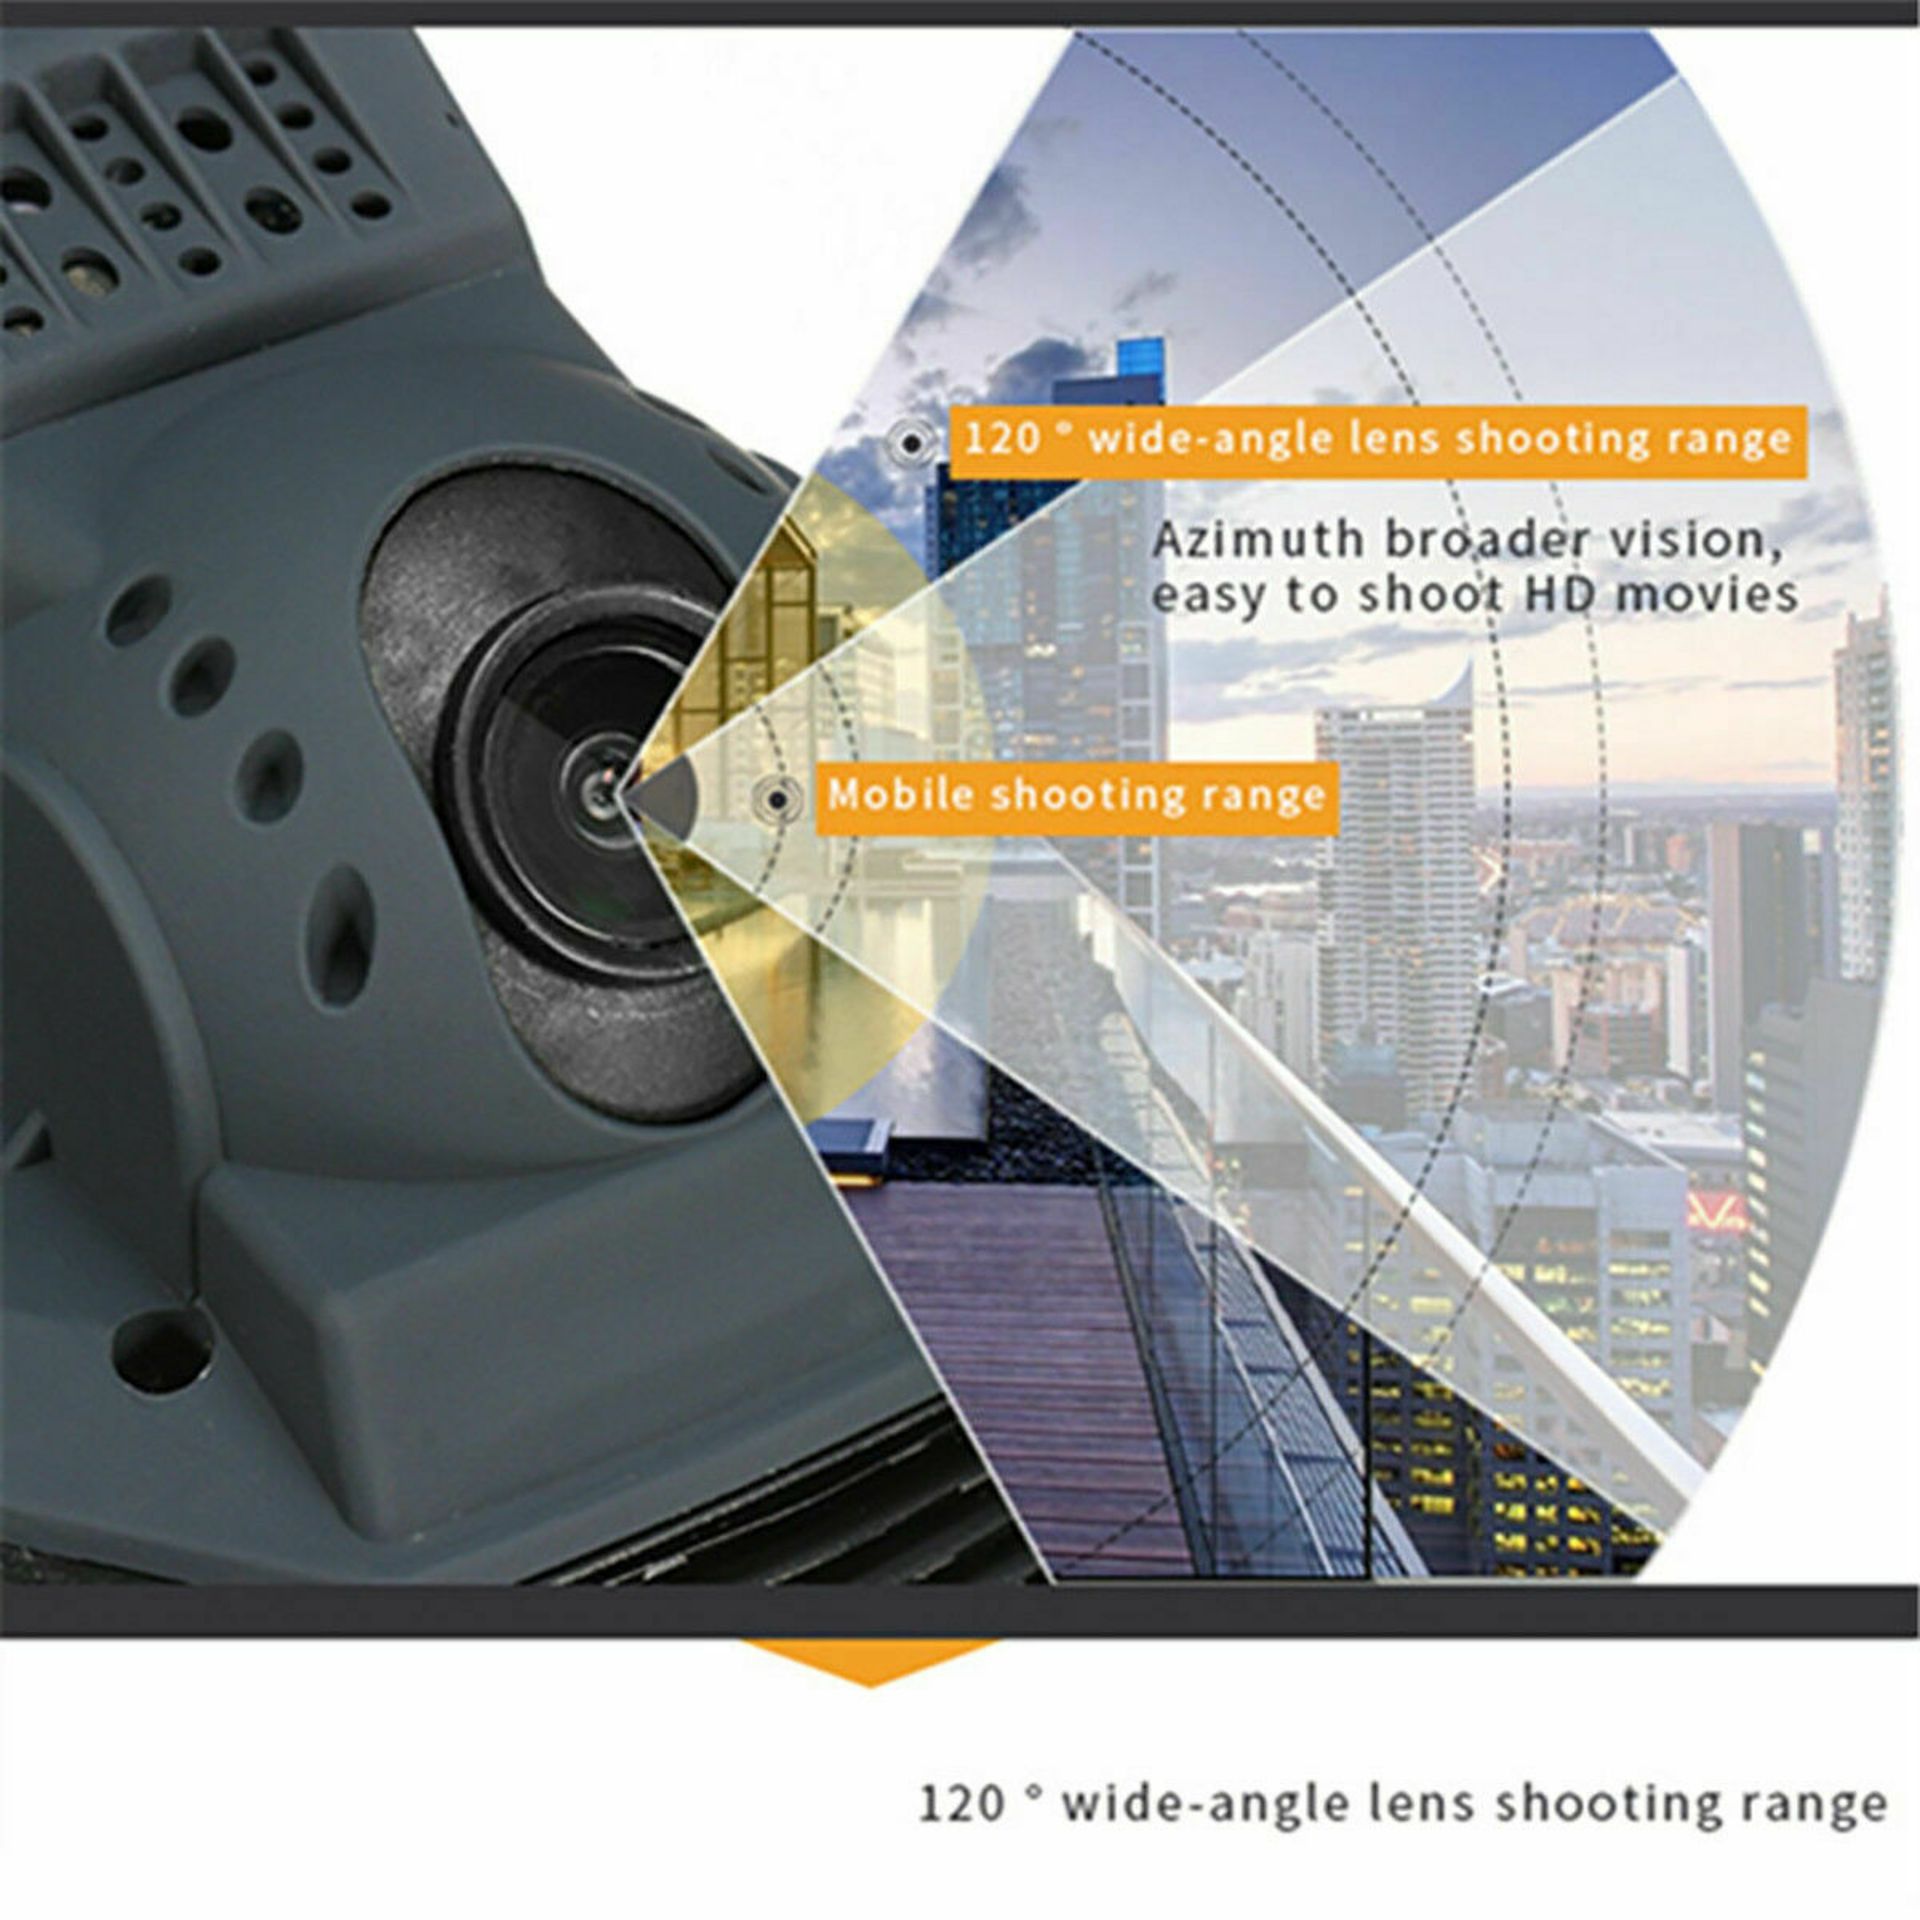 NEW & UNUSED DRONE X PRO WIFI FPV 4k video HD CAMERA FOLDABLE RC QUADCOPTER + BAG *PLUS VAT* - Image 8 of 12